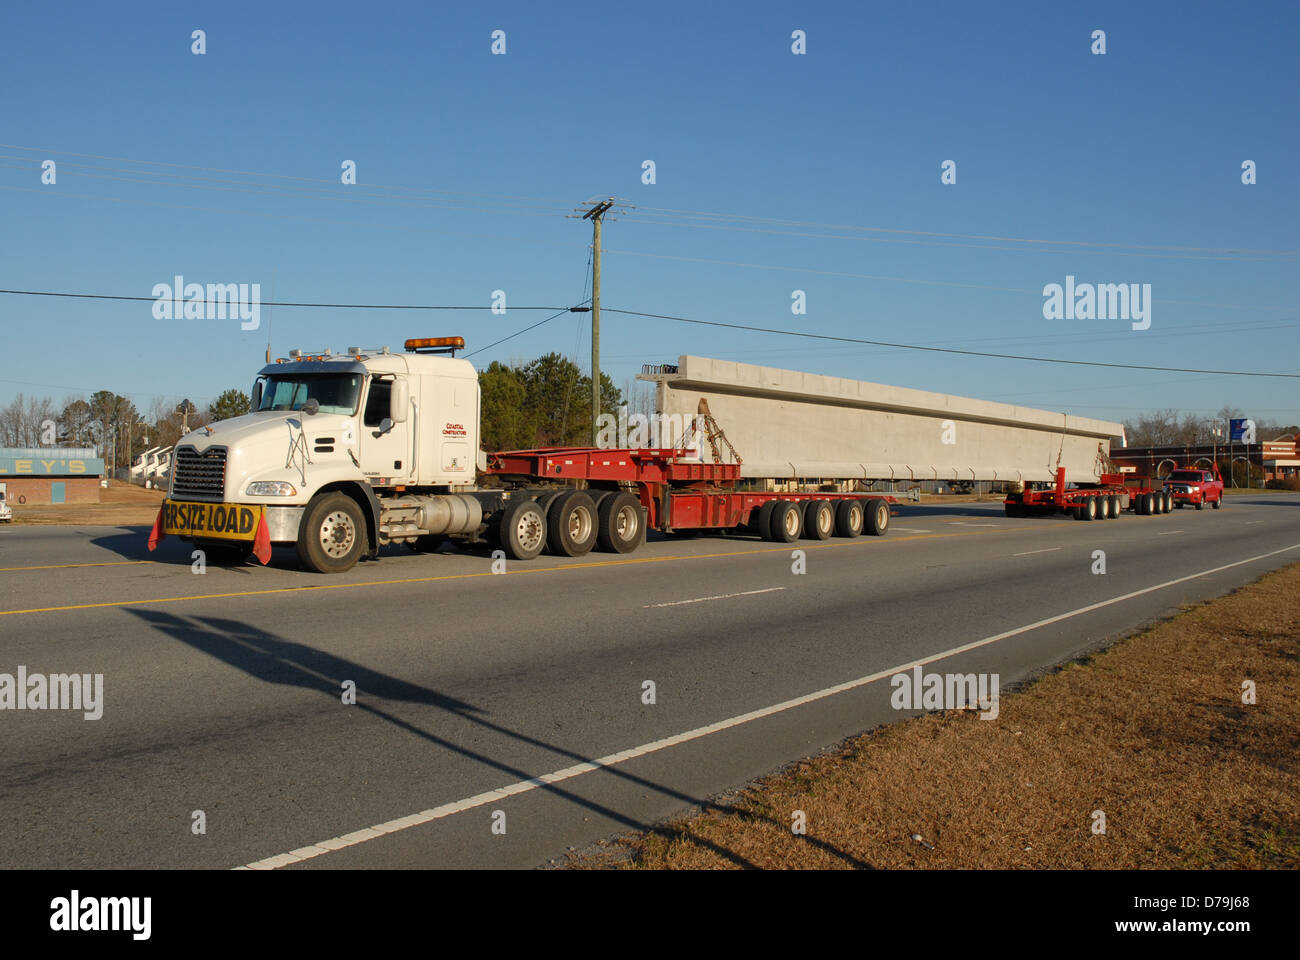 a-large-truck-carrying-a-i-beam-for-bridge-construction-D79J68.jpg